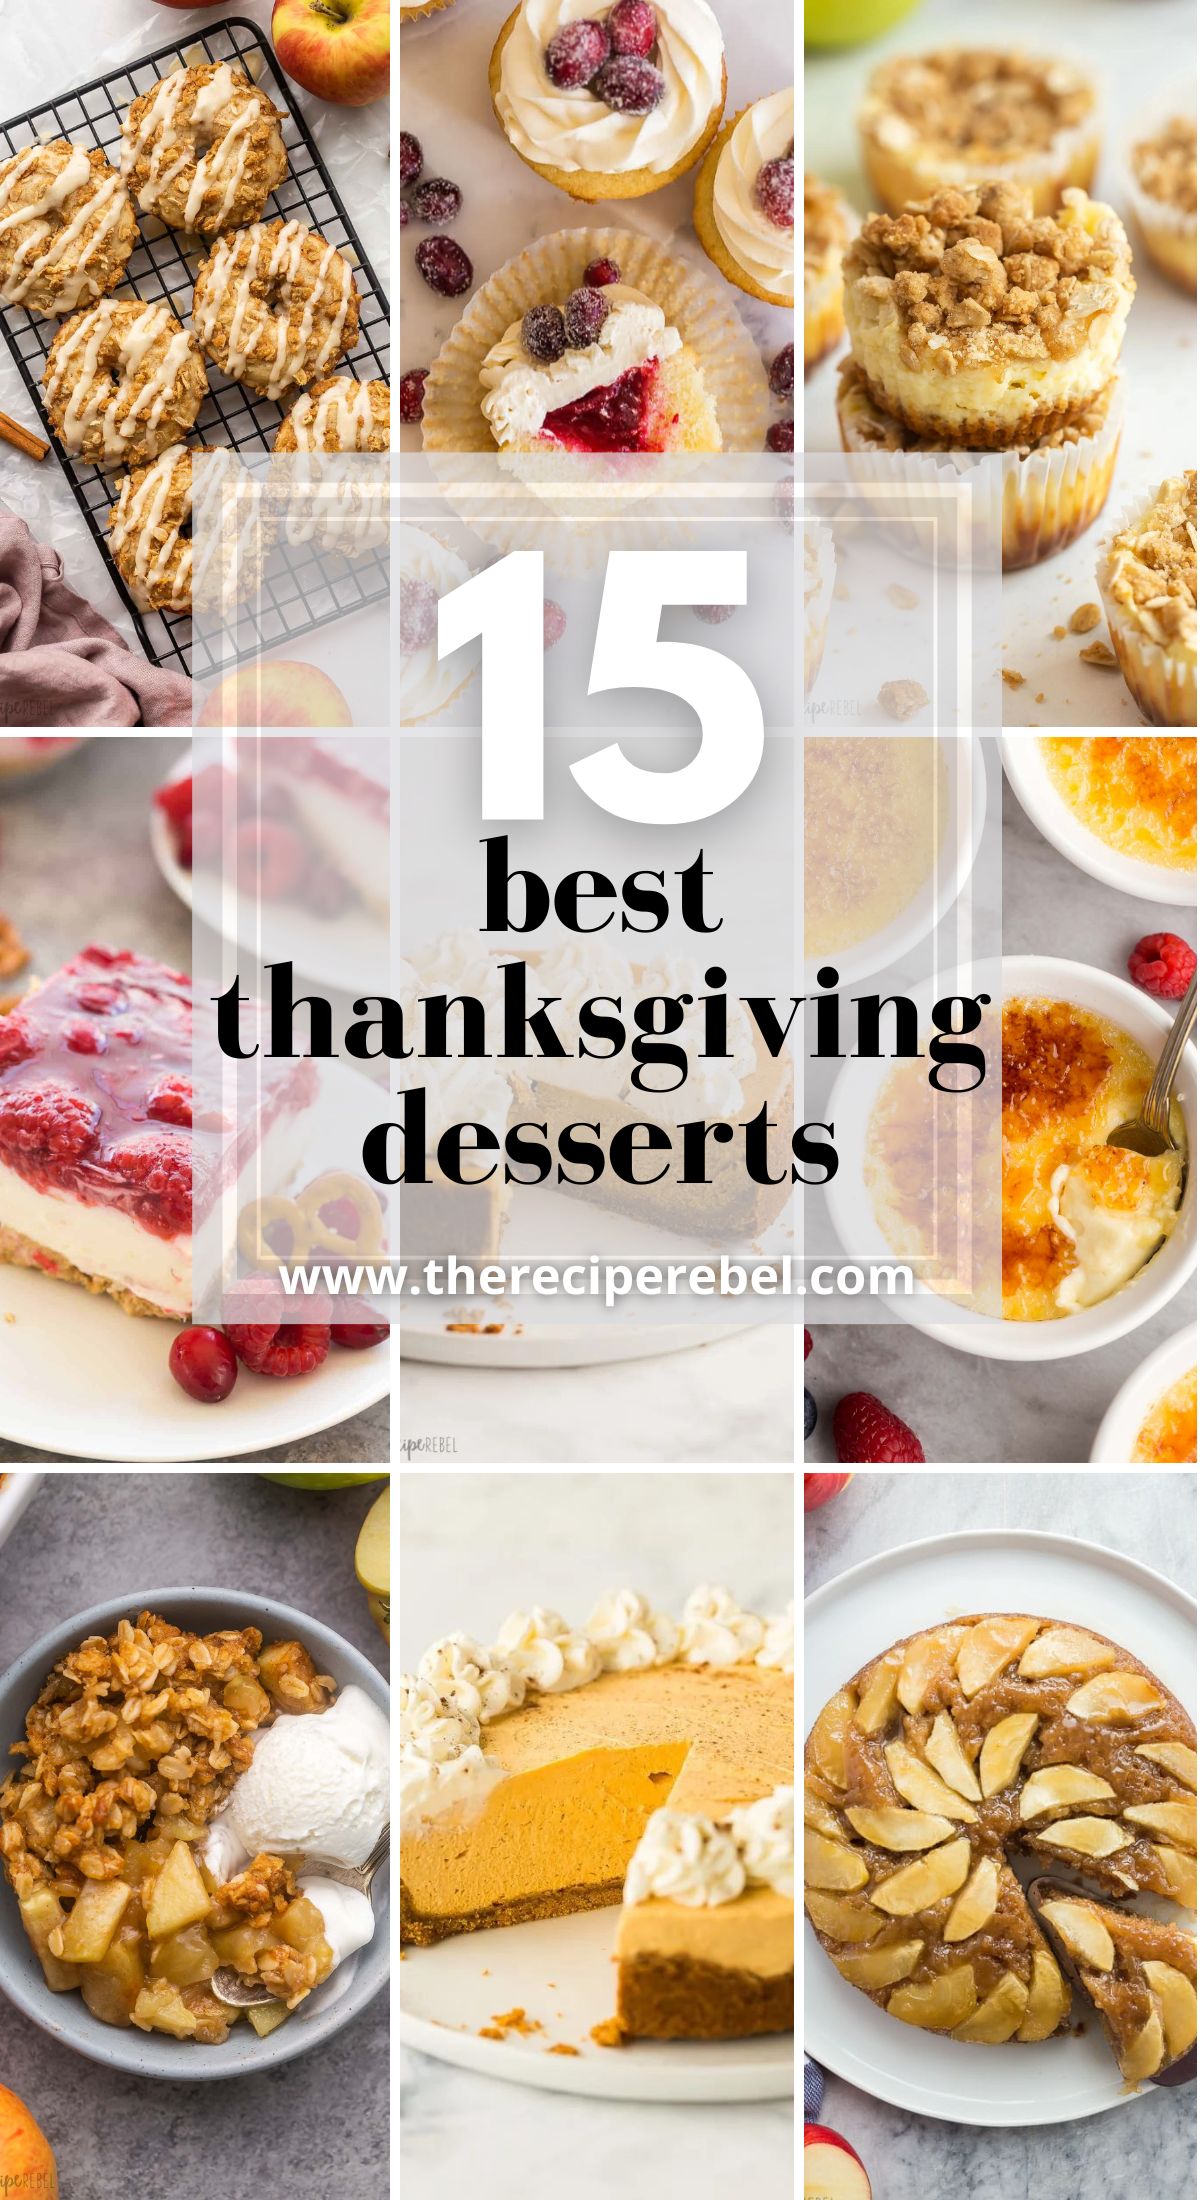 thanksgiving desserts pinterest collage with nine dessert images.
